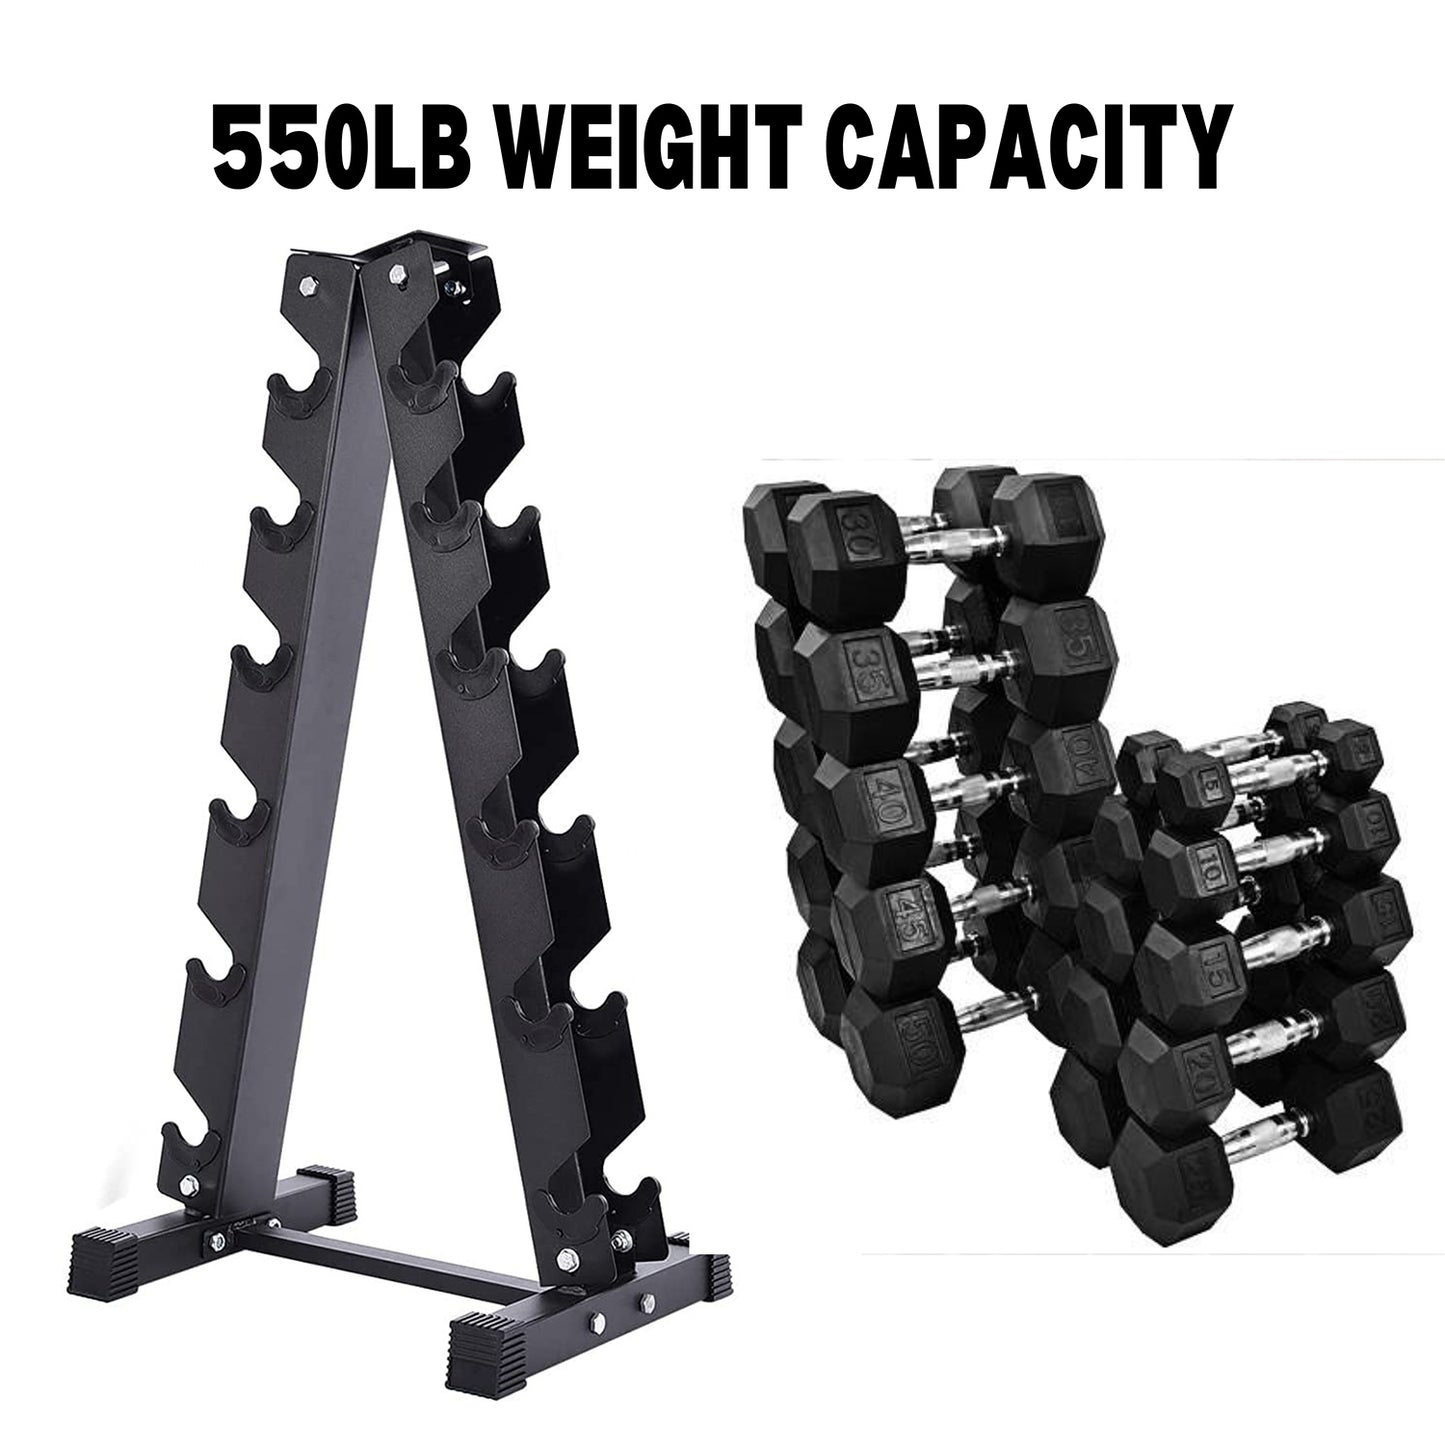 Motv8 6 Tier Triangle Dumbbell Rack Weight Capacity